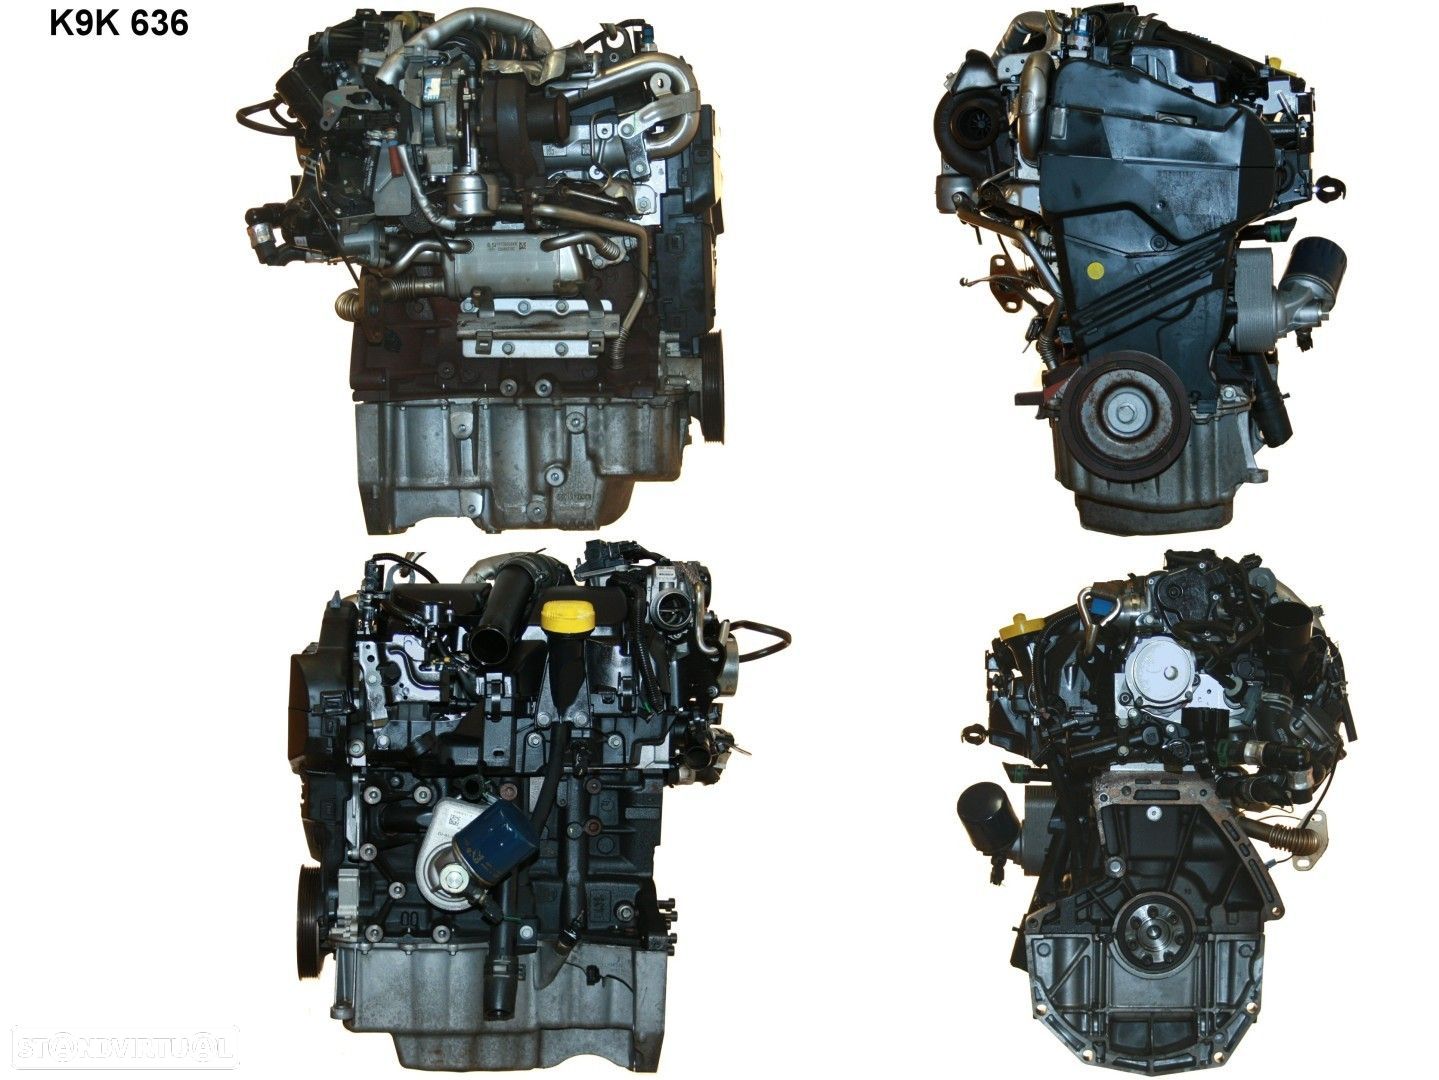 Motor Completo  Usado NISSAN QASHQAI 1.5 dCi K9K 636 - 1